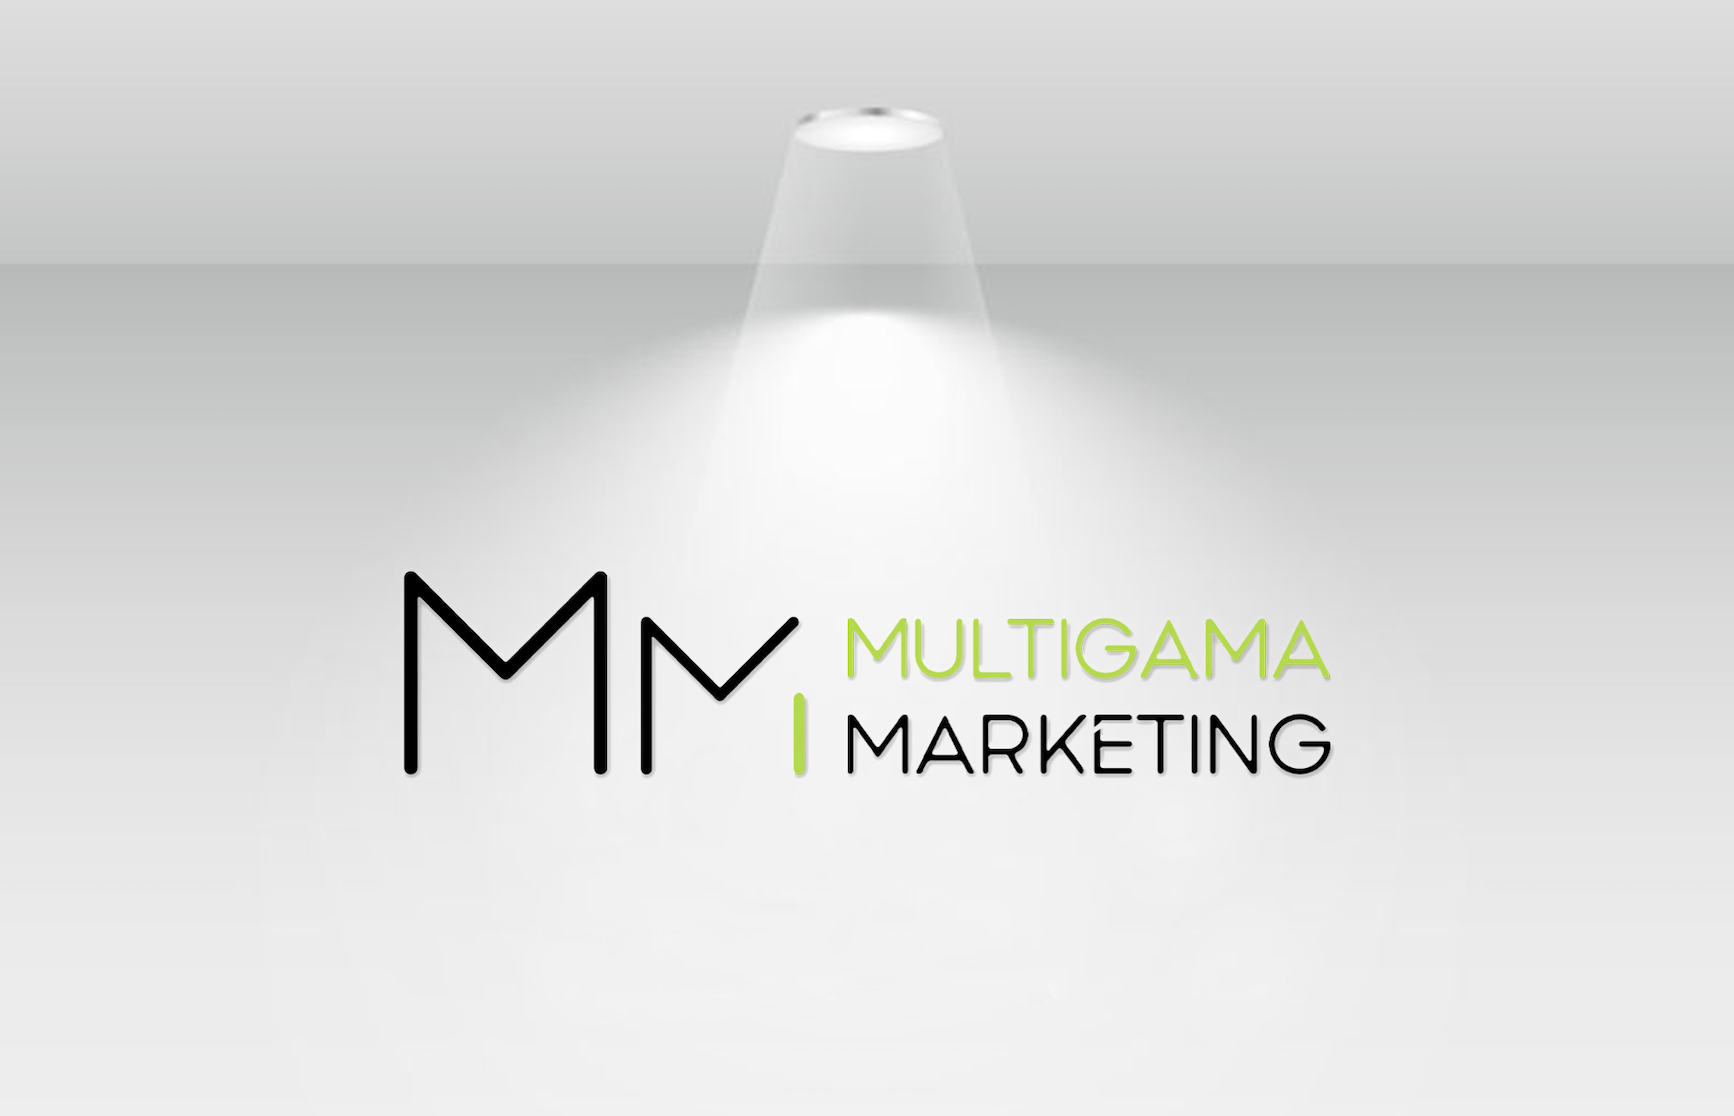 Multigama Marketing Kontakt SEO SEA Agentur Online Marketing Performance Werbekampagnen Programmierung 1